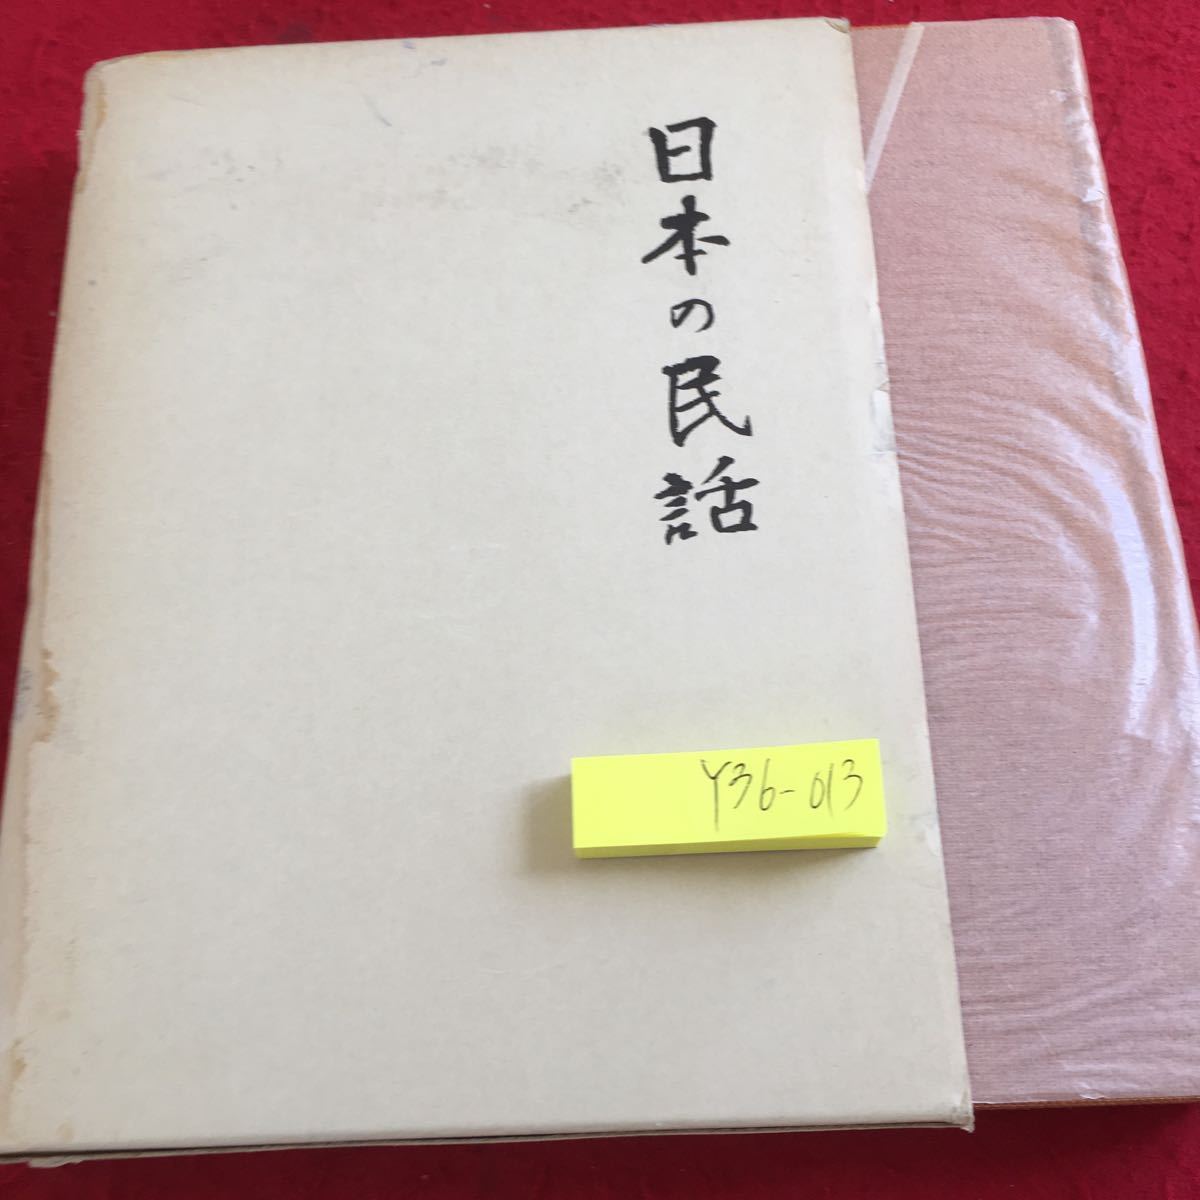 Y36-013 japanese folk tale 18.. compilation .. compilation Takeda Akira compilation future company boxed ... Showa era 49 year issue .. woman . mountain ... ........ etc. 